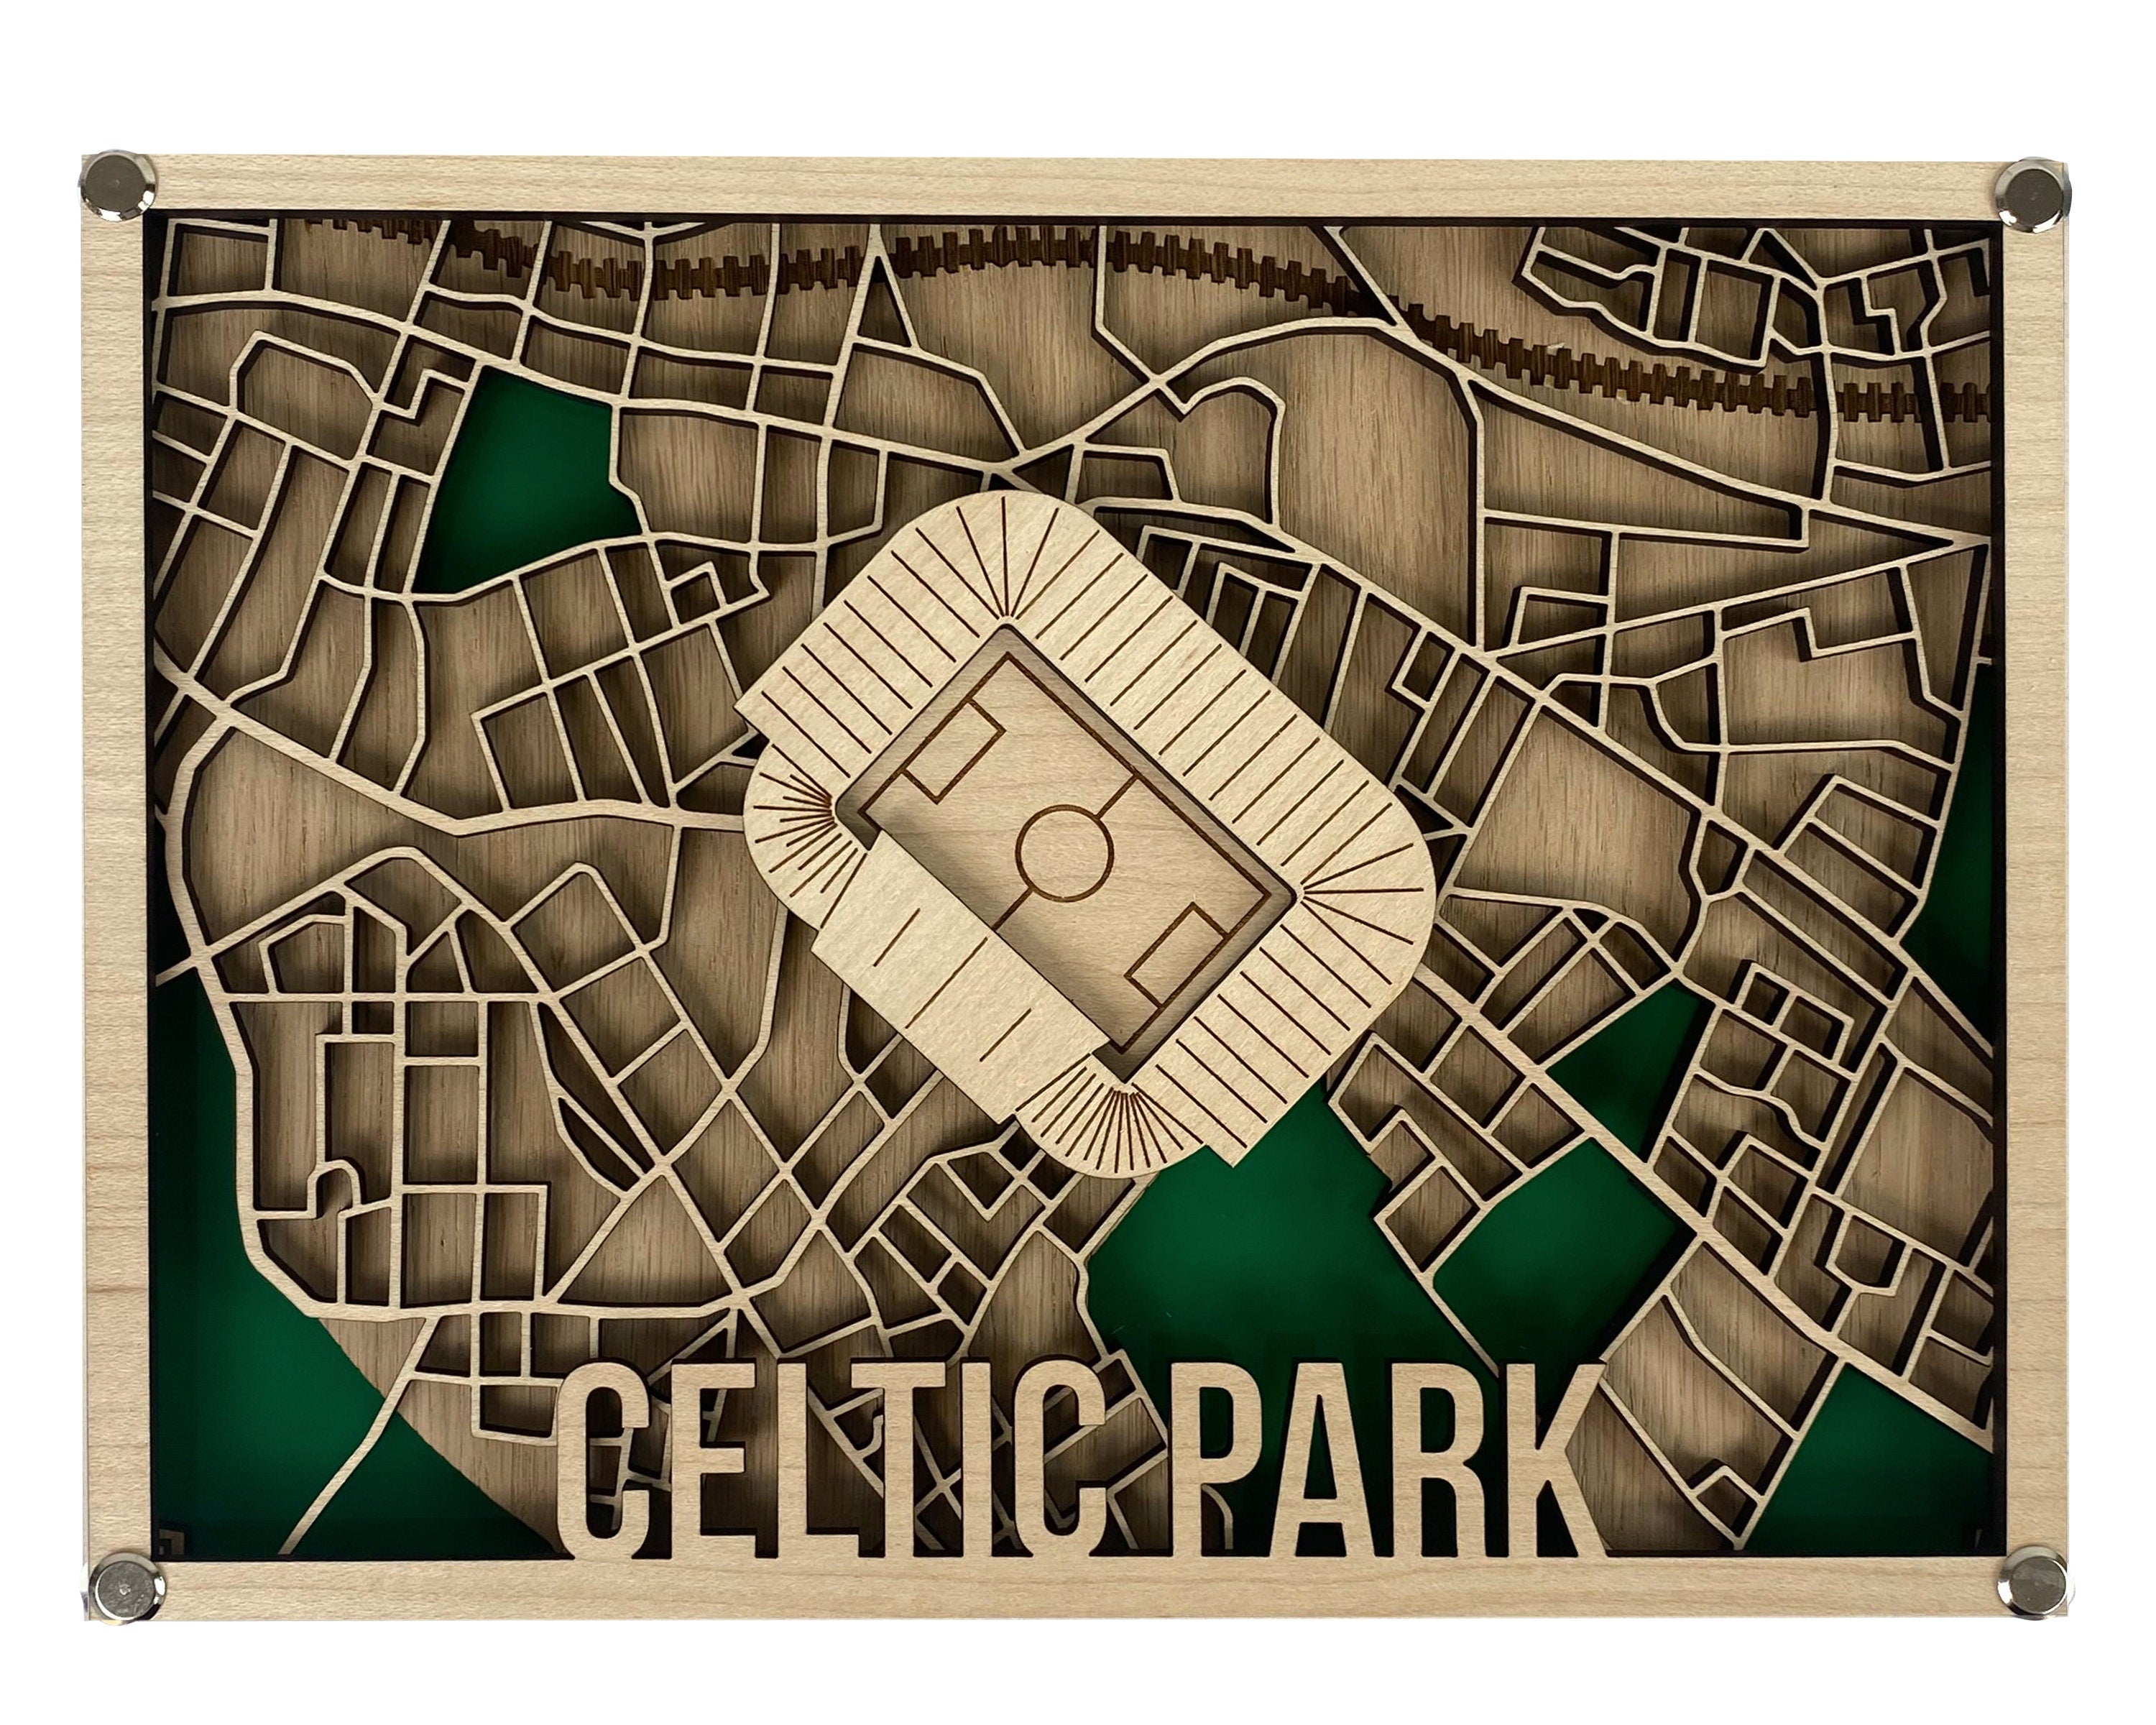 Wooden Celtic Park Football Stadium, The Bhoys, The Celts, The Hoops